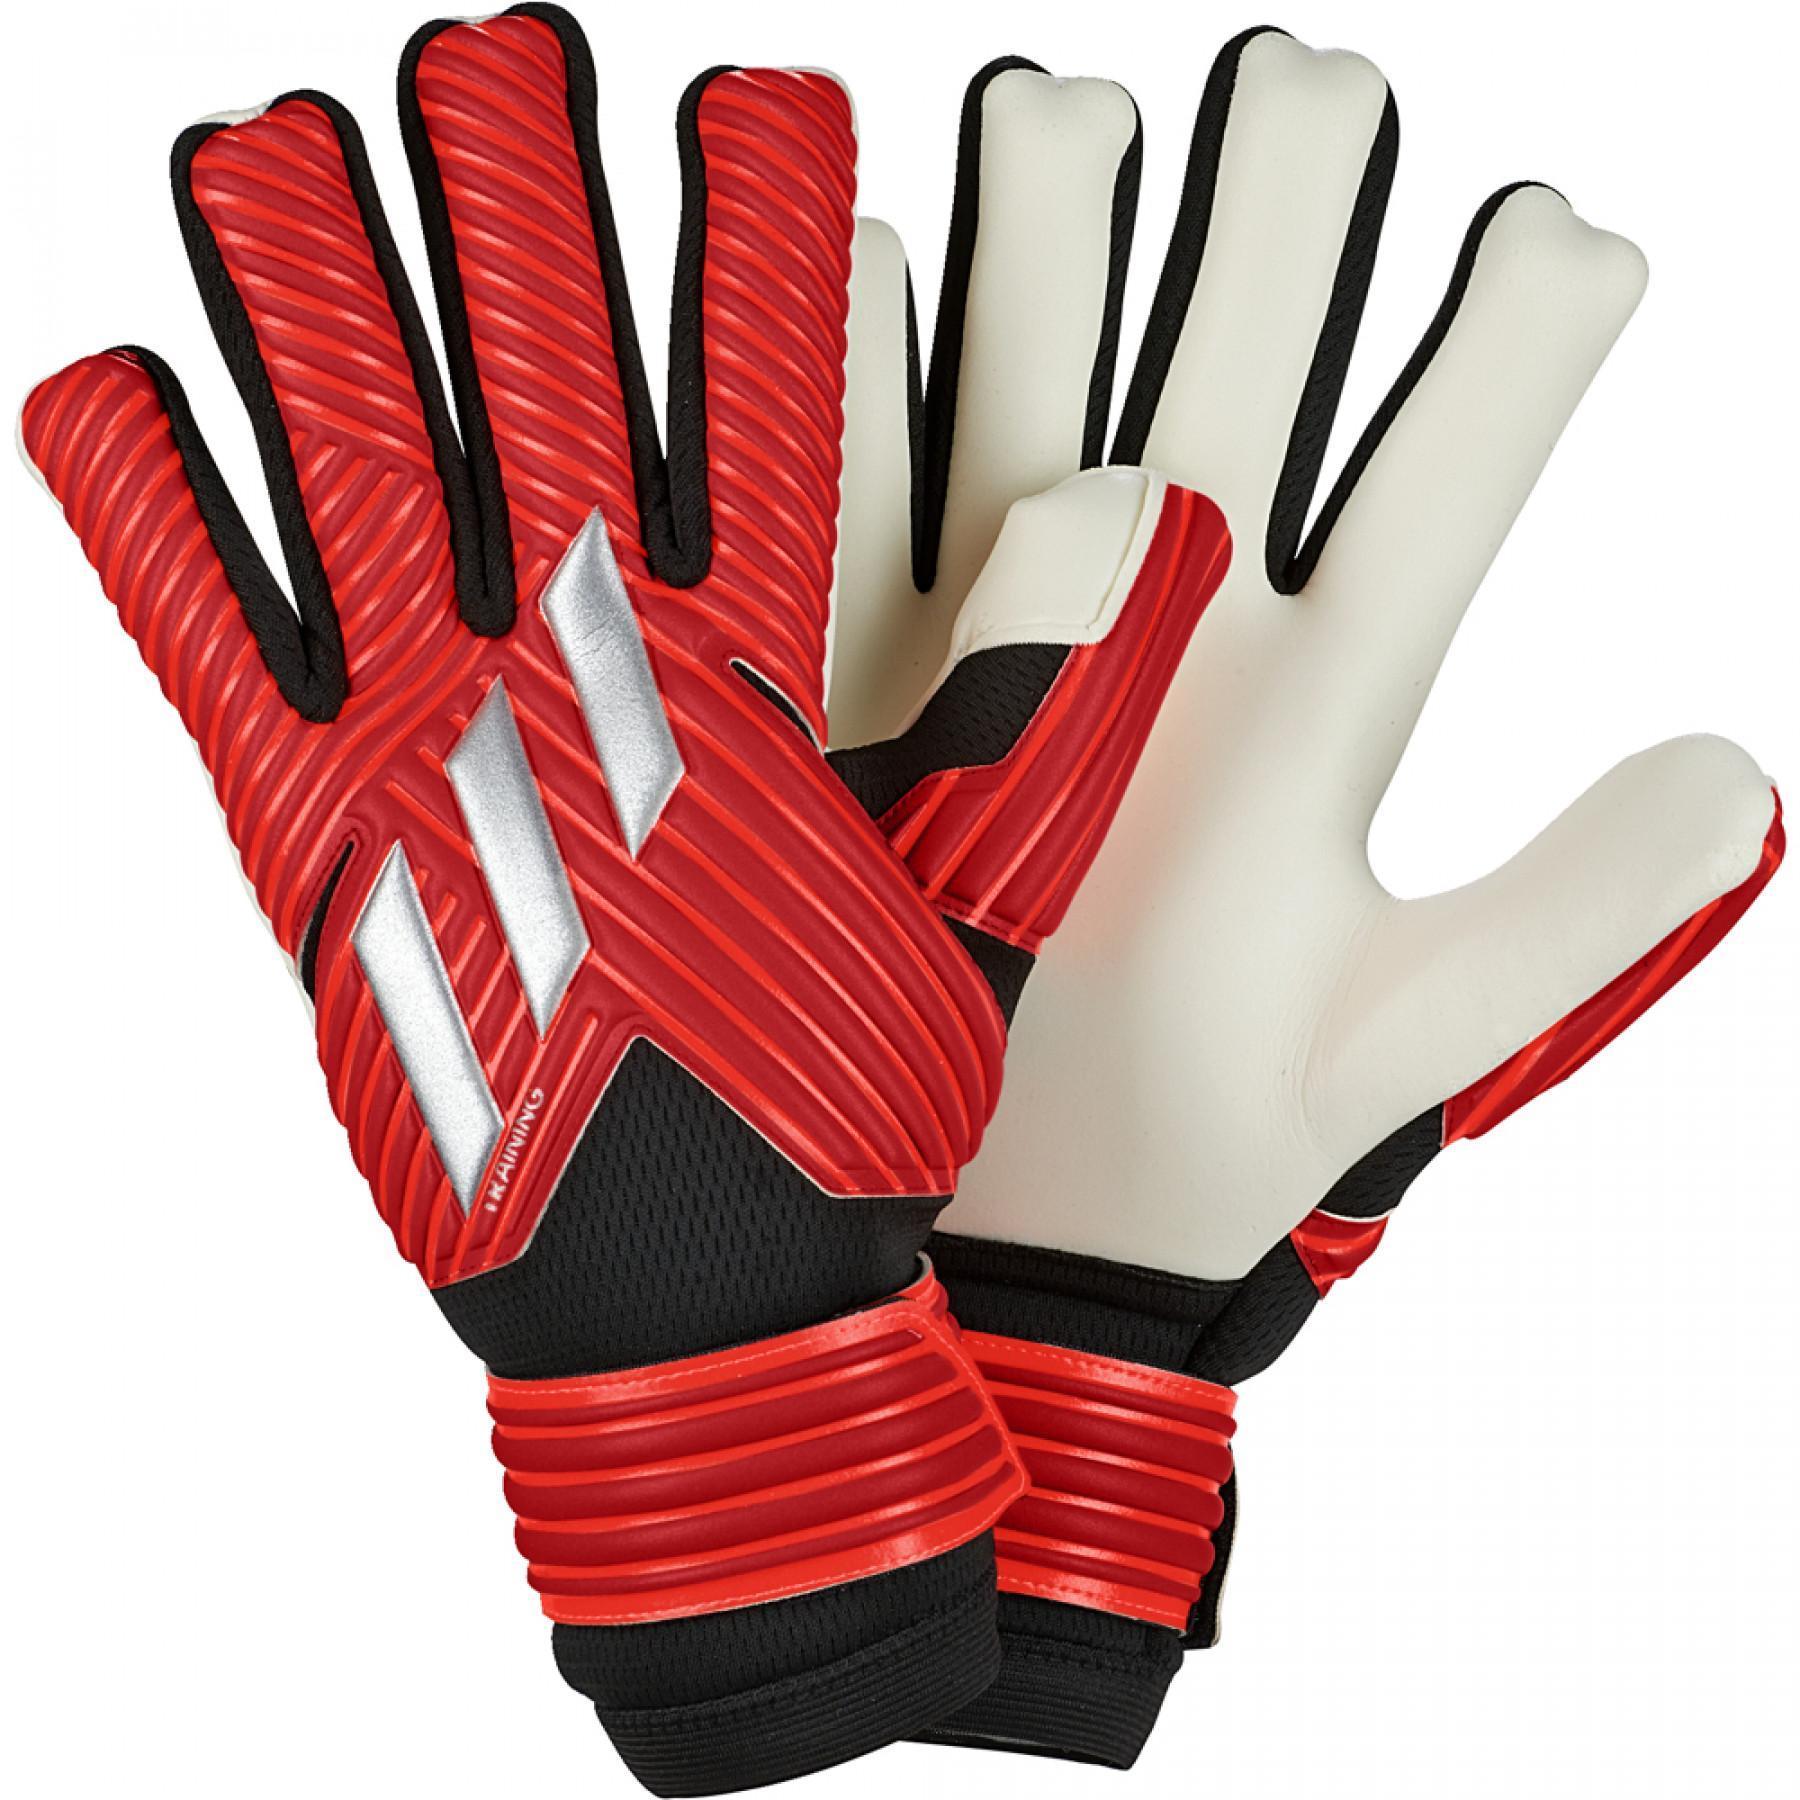 Goalkeeper gloves adidas NMZ TRN